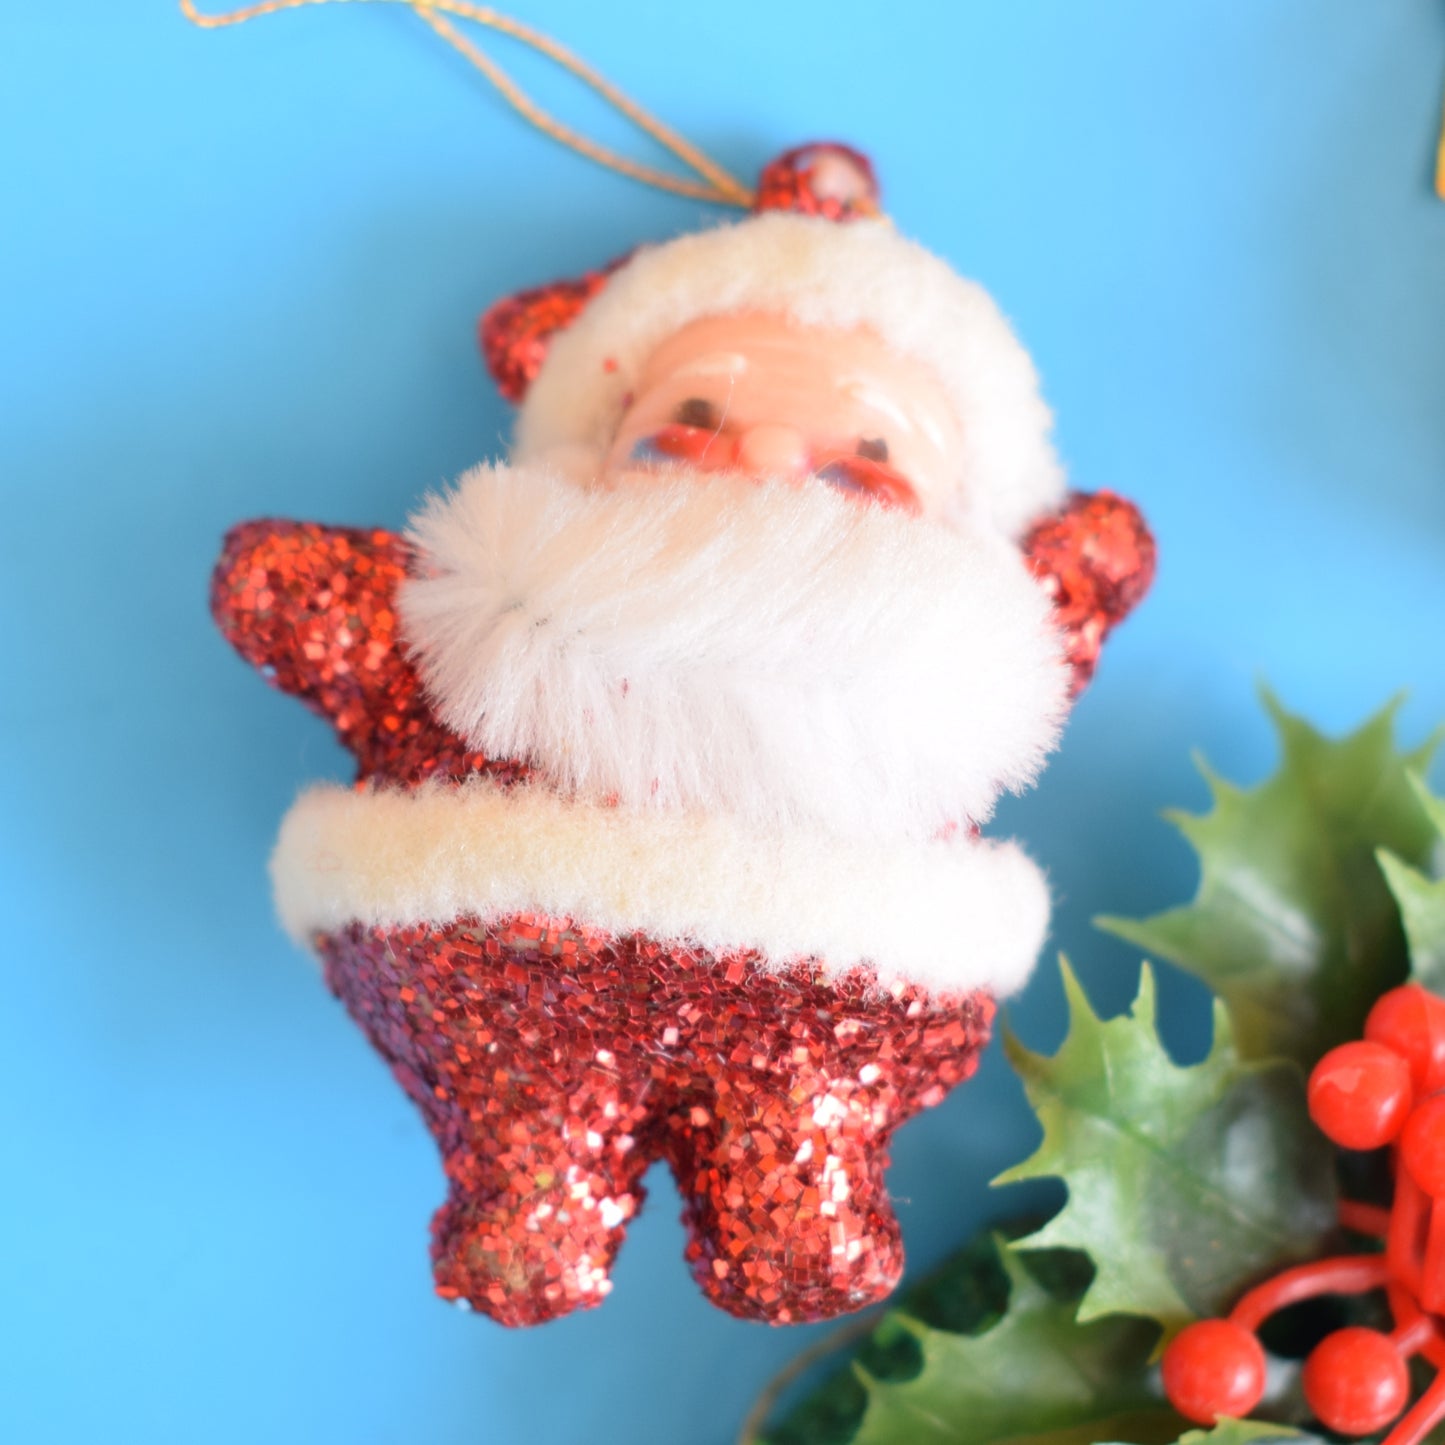 Vintage 1960s Kitsch Glitter Plastic Christmas Decorations x5 - Santa